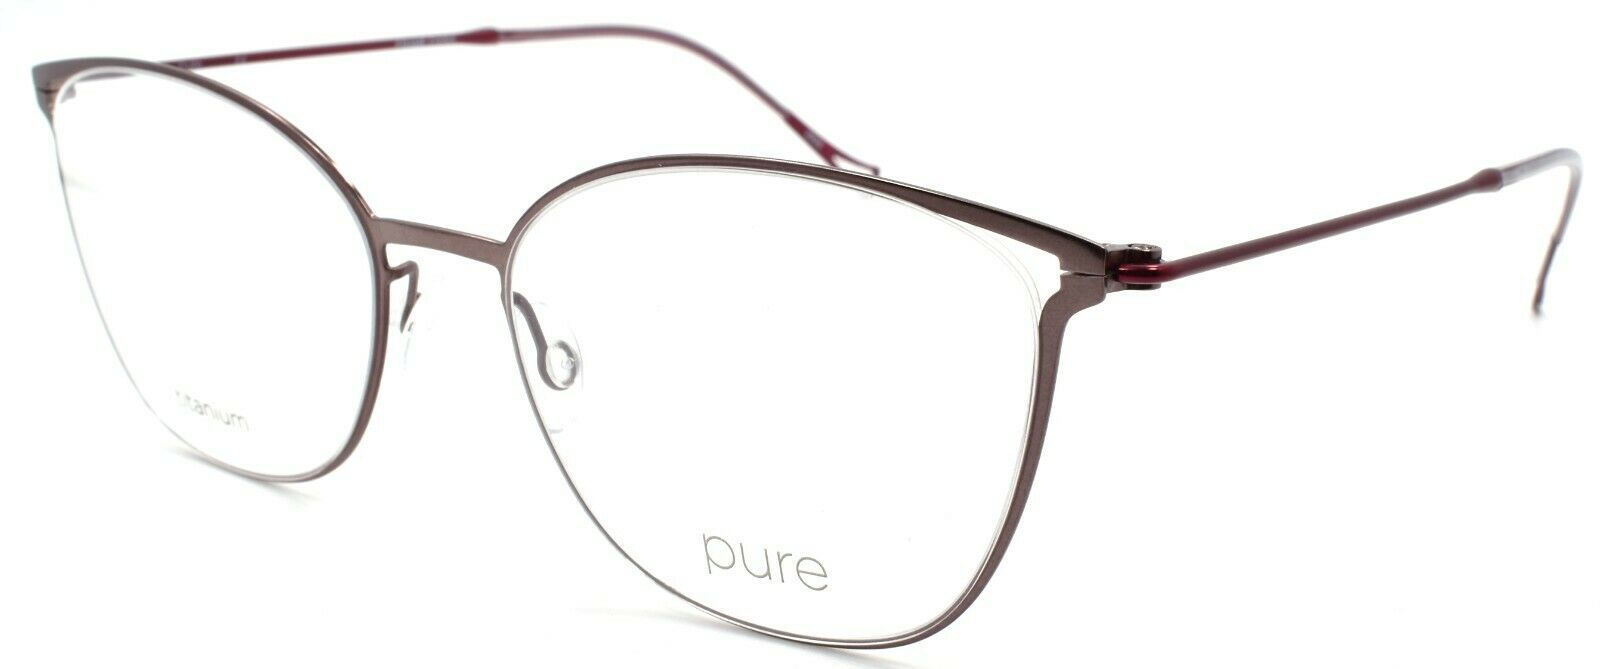 1-Marchon Airlock Pure P-5004 601 Women's Eyeglasses Frame Titanium 51-17-140 Rose-886895473057-IKSpecs